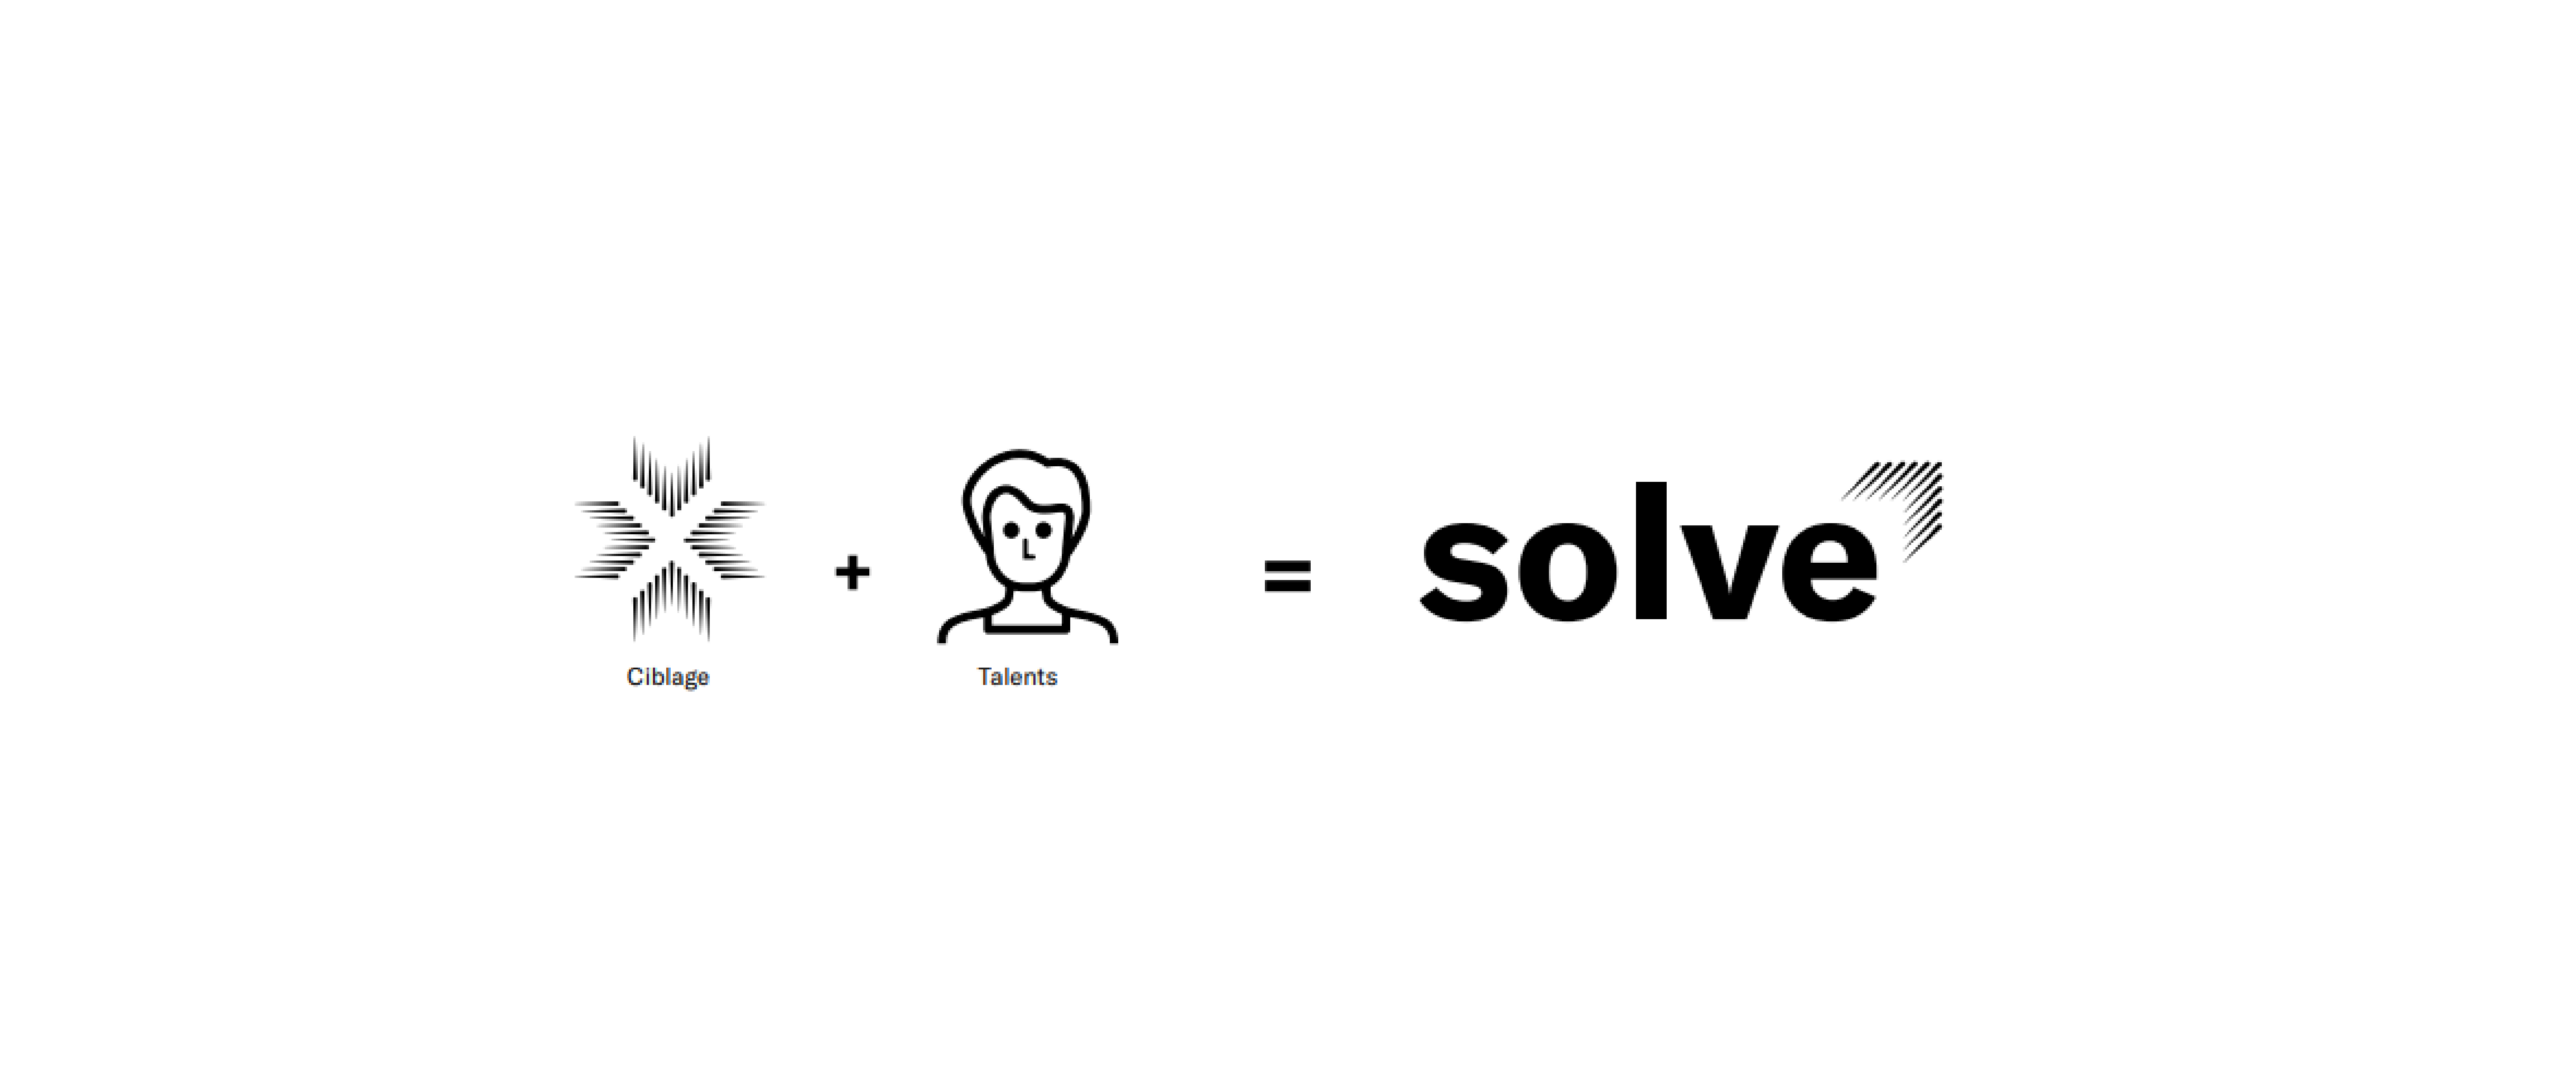 coxi_solve_logo_explication